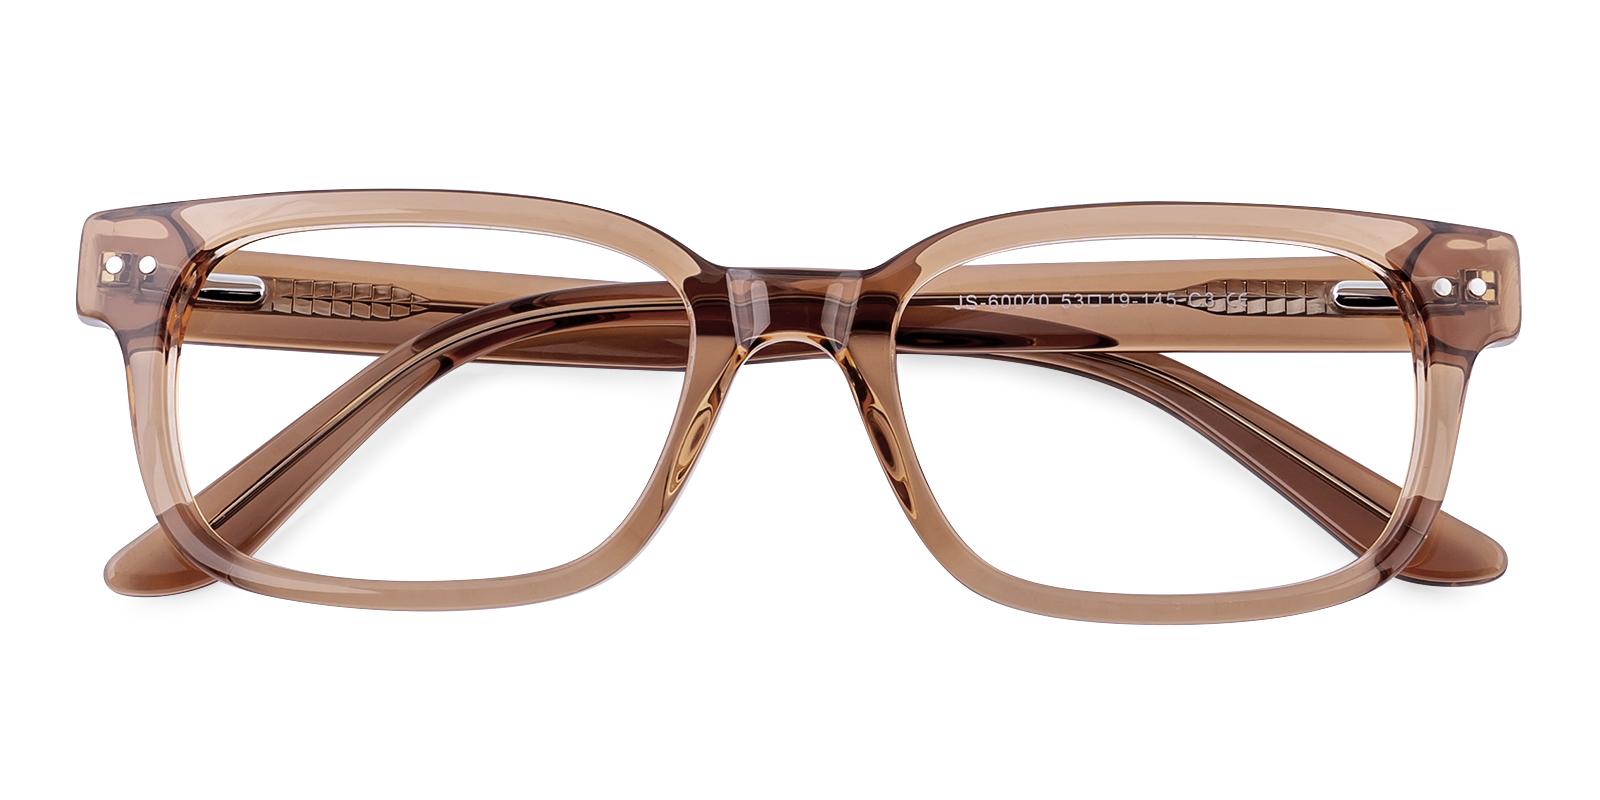 Beginist Brown Acetate Eyeglasses , SpringHinges , UniversalBridgeFit Frames from ABBE Glasses